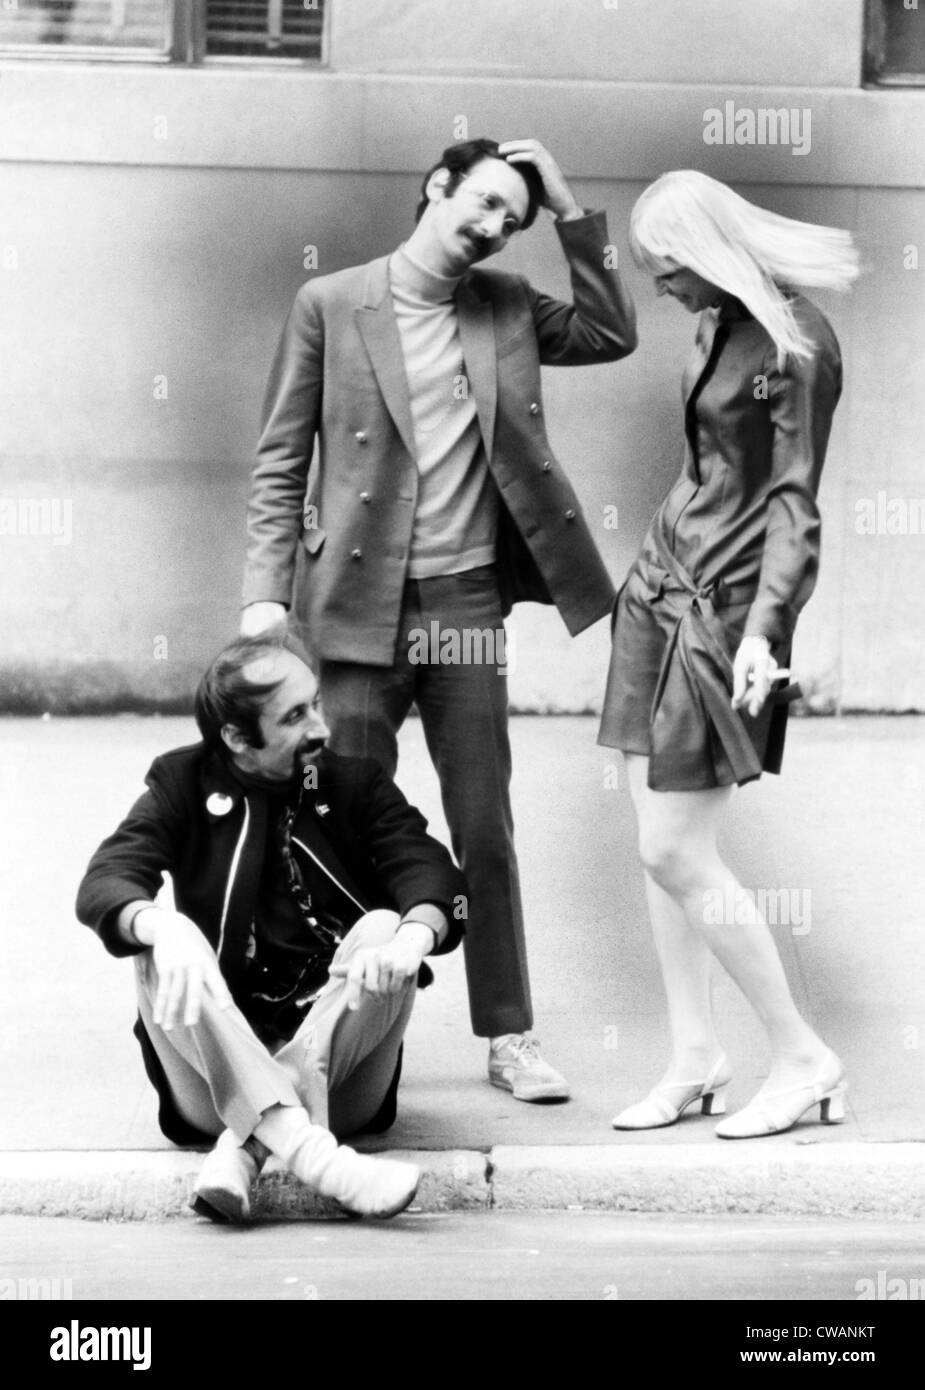 Pietro Paolo e Maria, (Paul Stookey, Peter Yarrow, Maria Travers), 1960s. La cortesia: CSU Archivi / Everett Collection Foto Stock